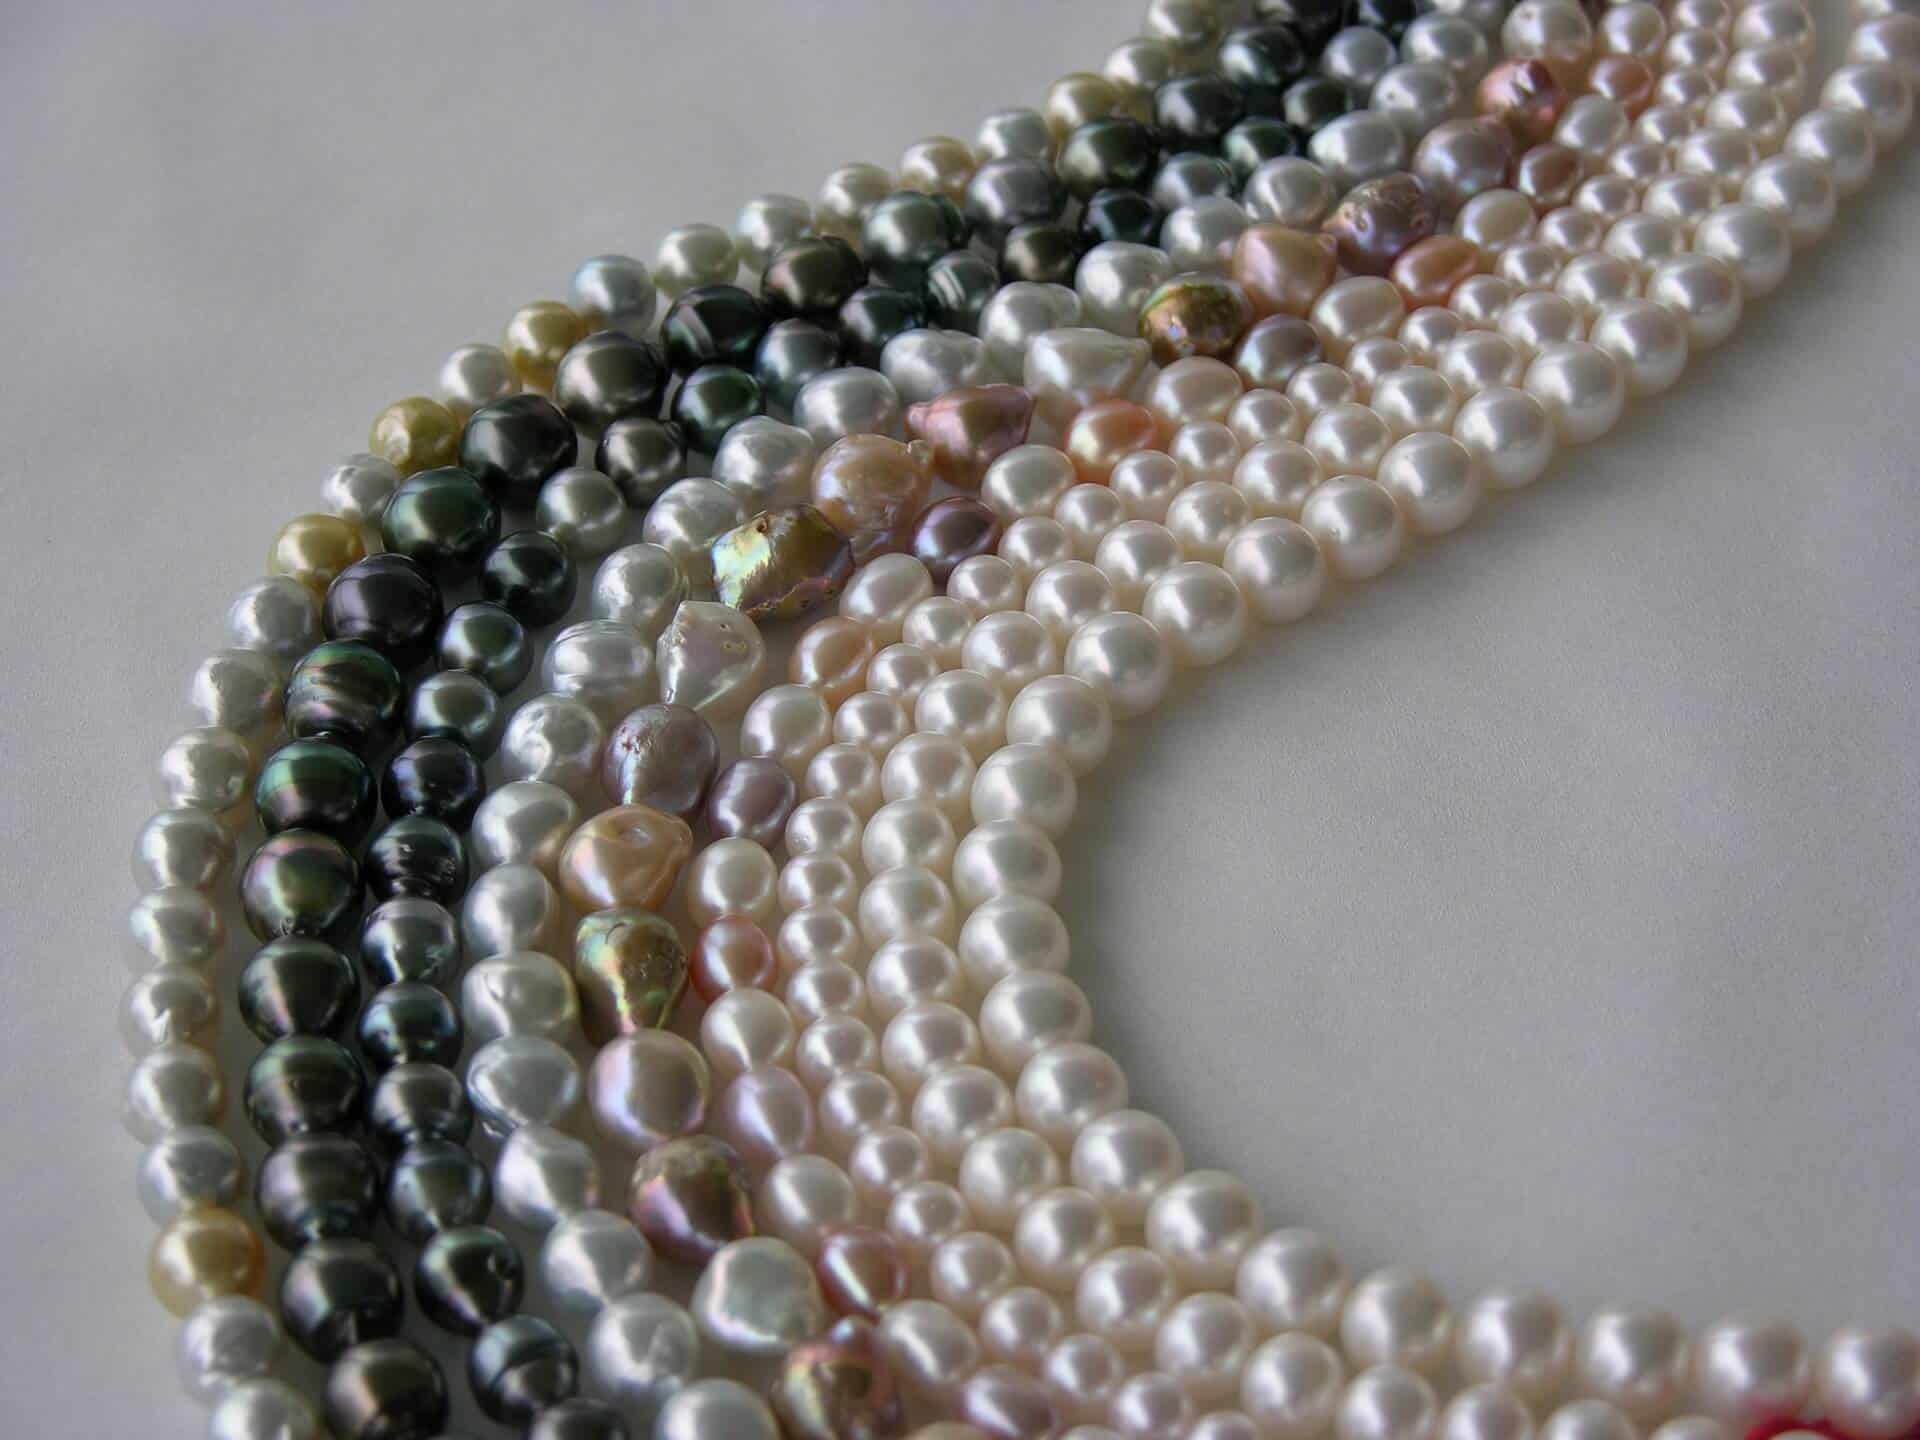 original pearl necklace price